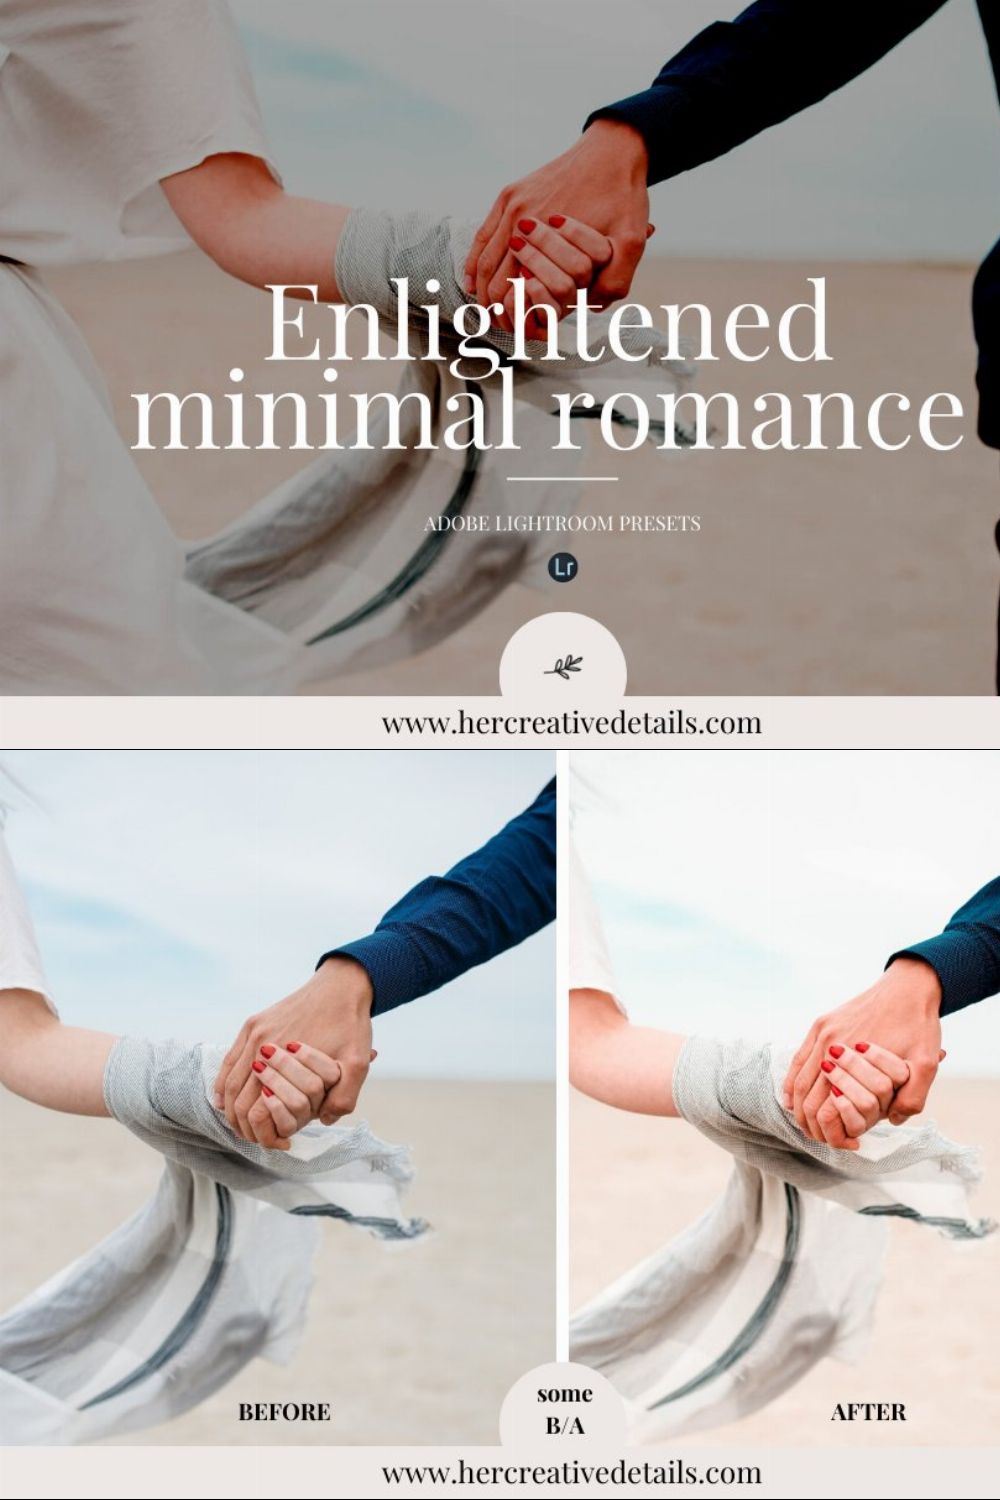 Enlightened minimal romance preset pinterest preview image.